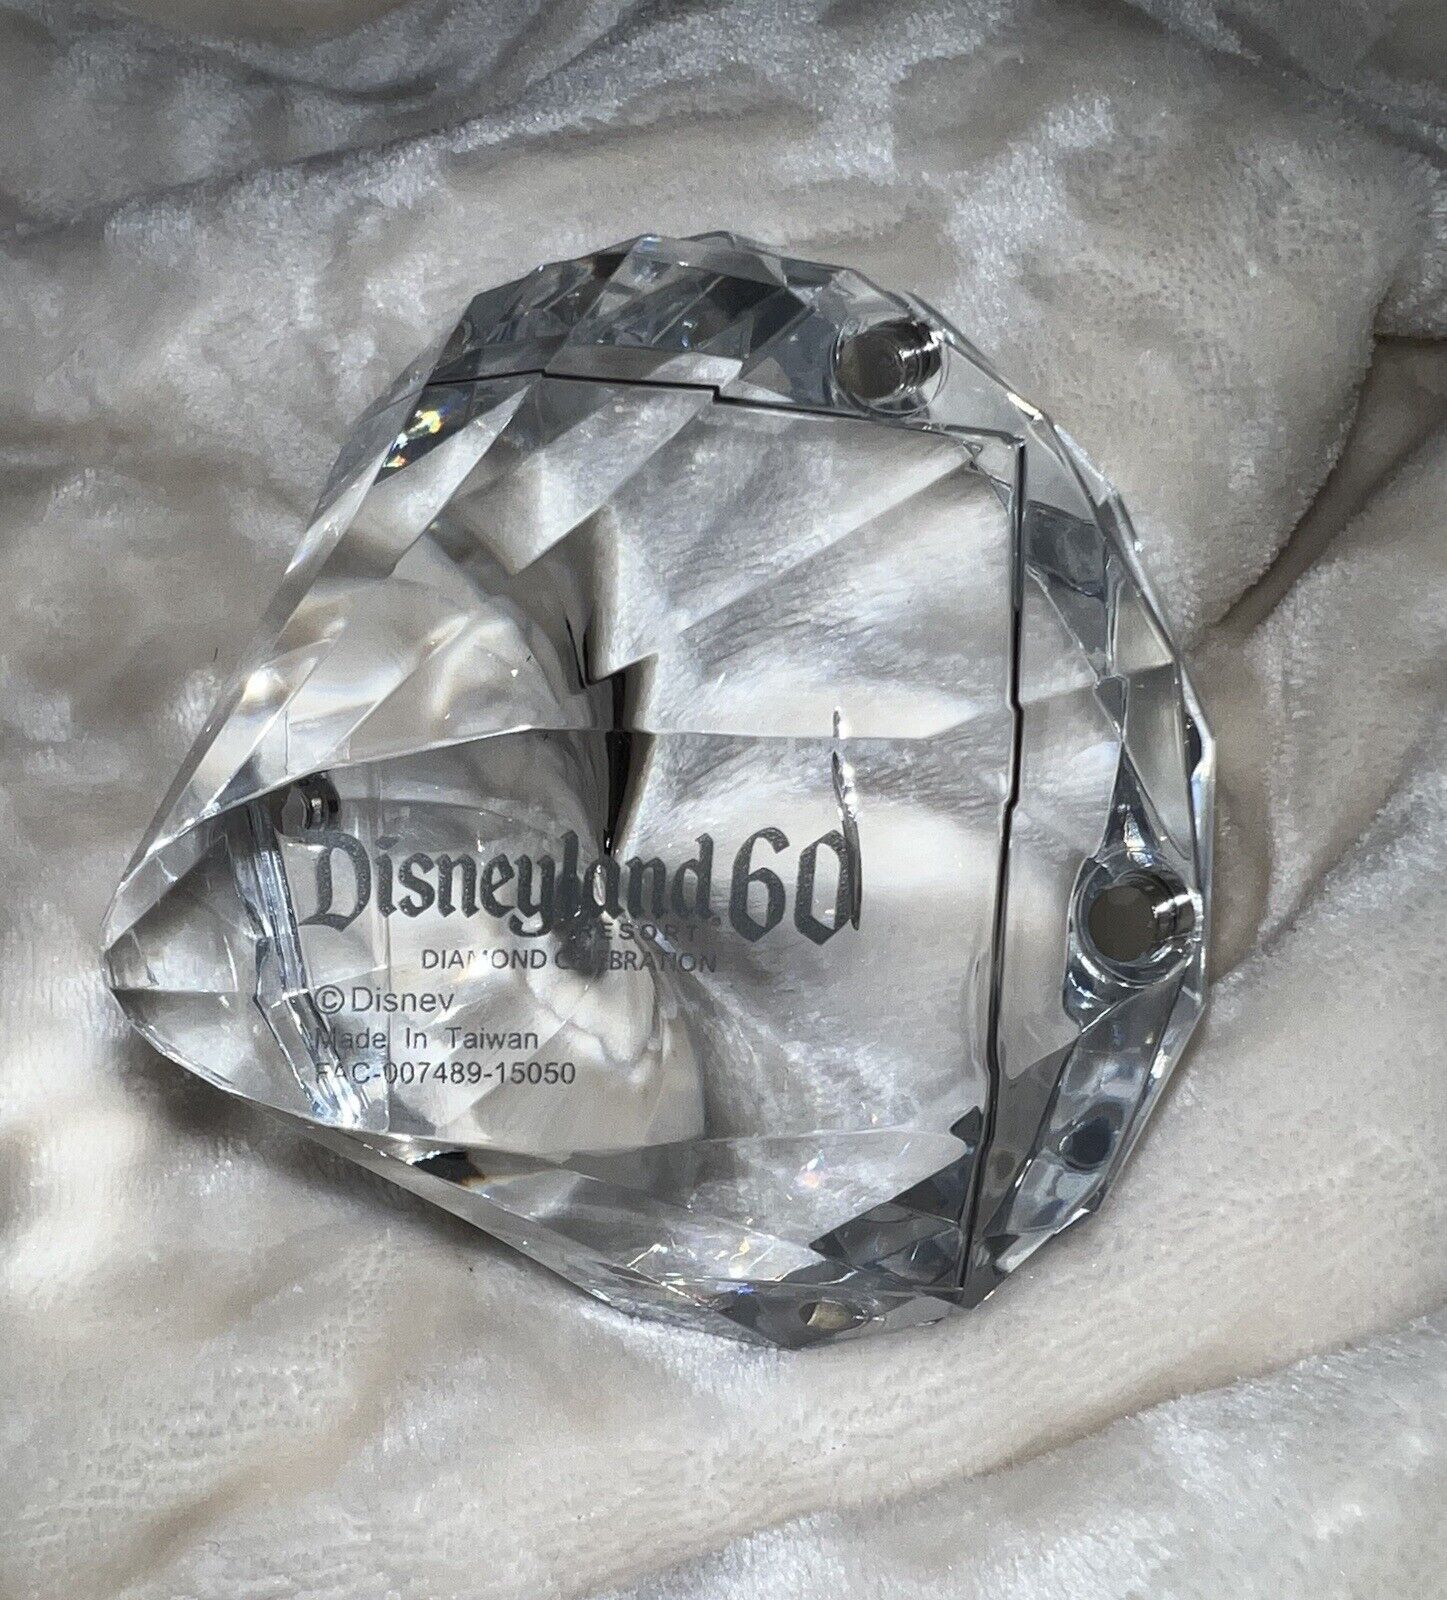 Disneyland Resort 60th Diamond Celebration*Acrylic Diamond-Shaped Picture Frame*